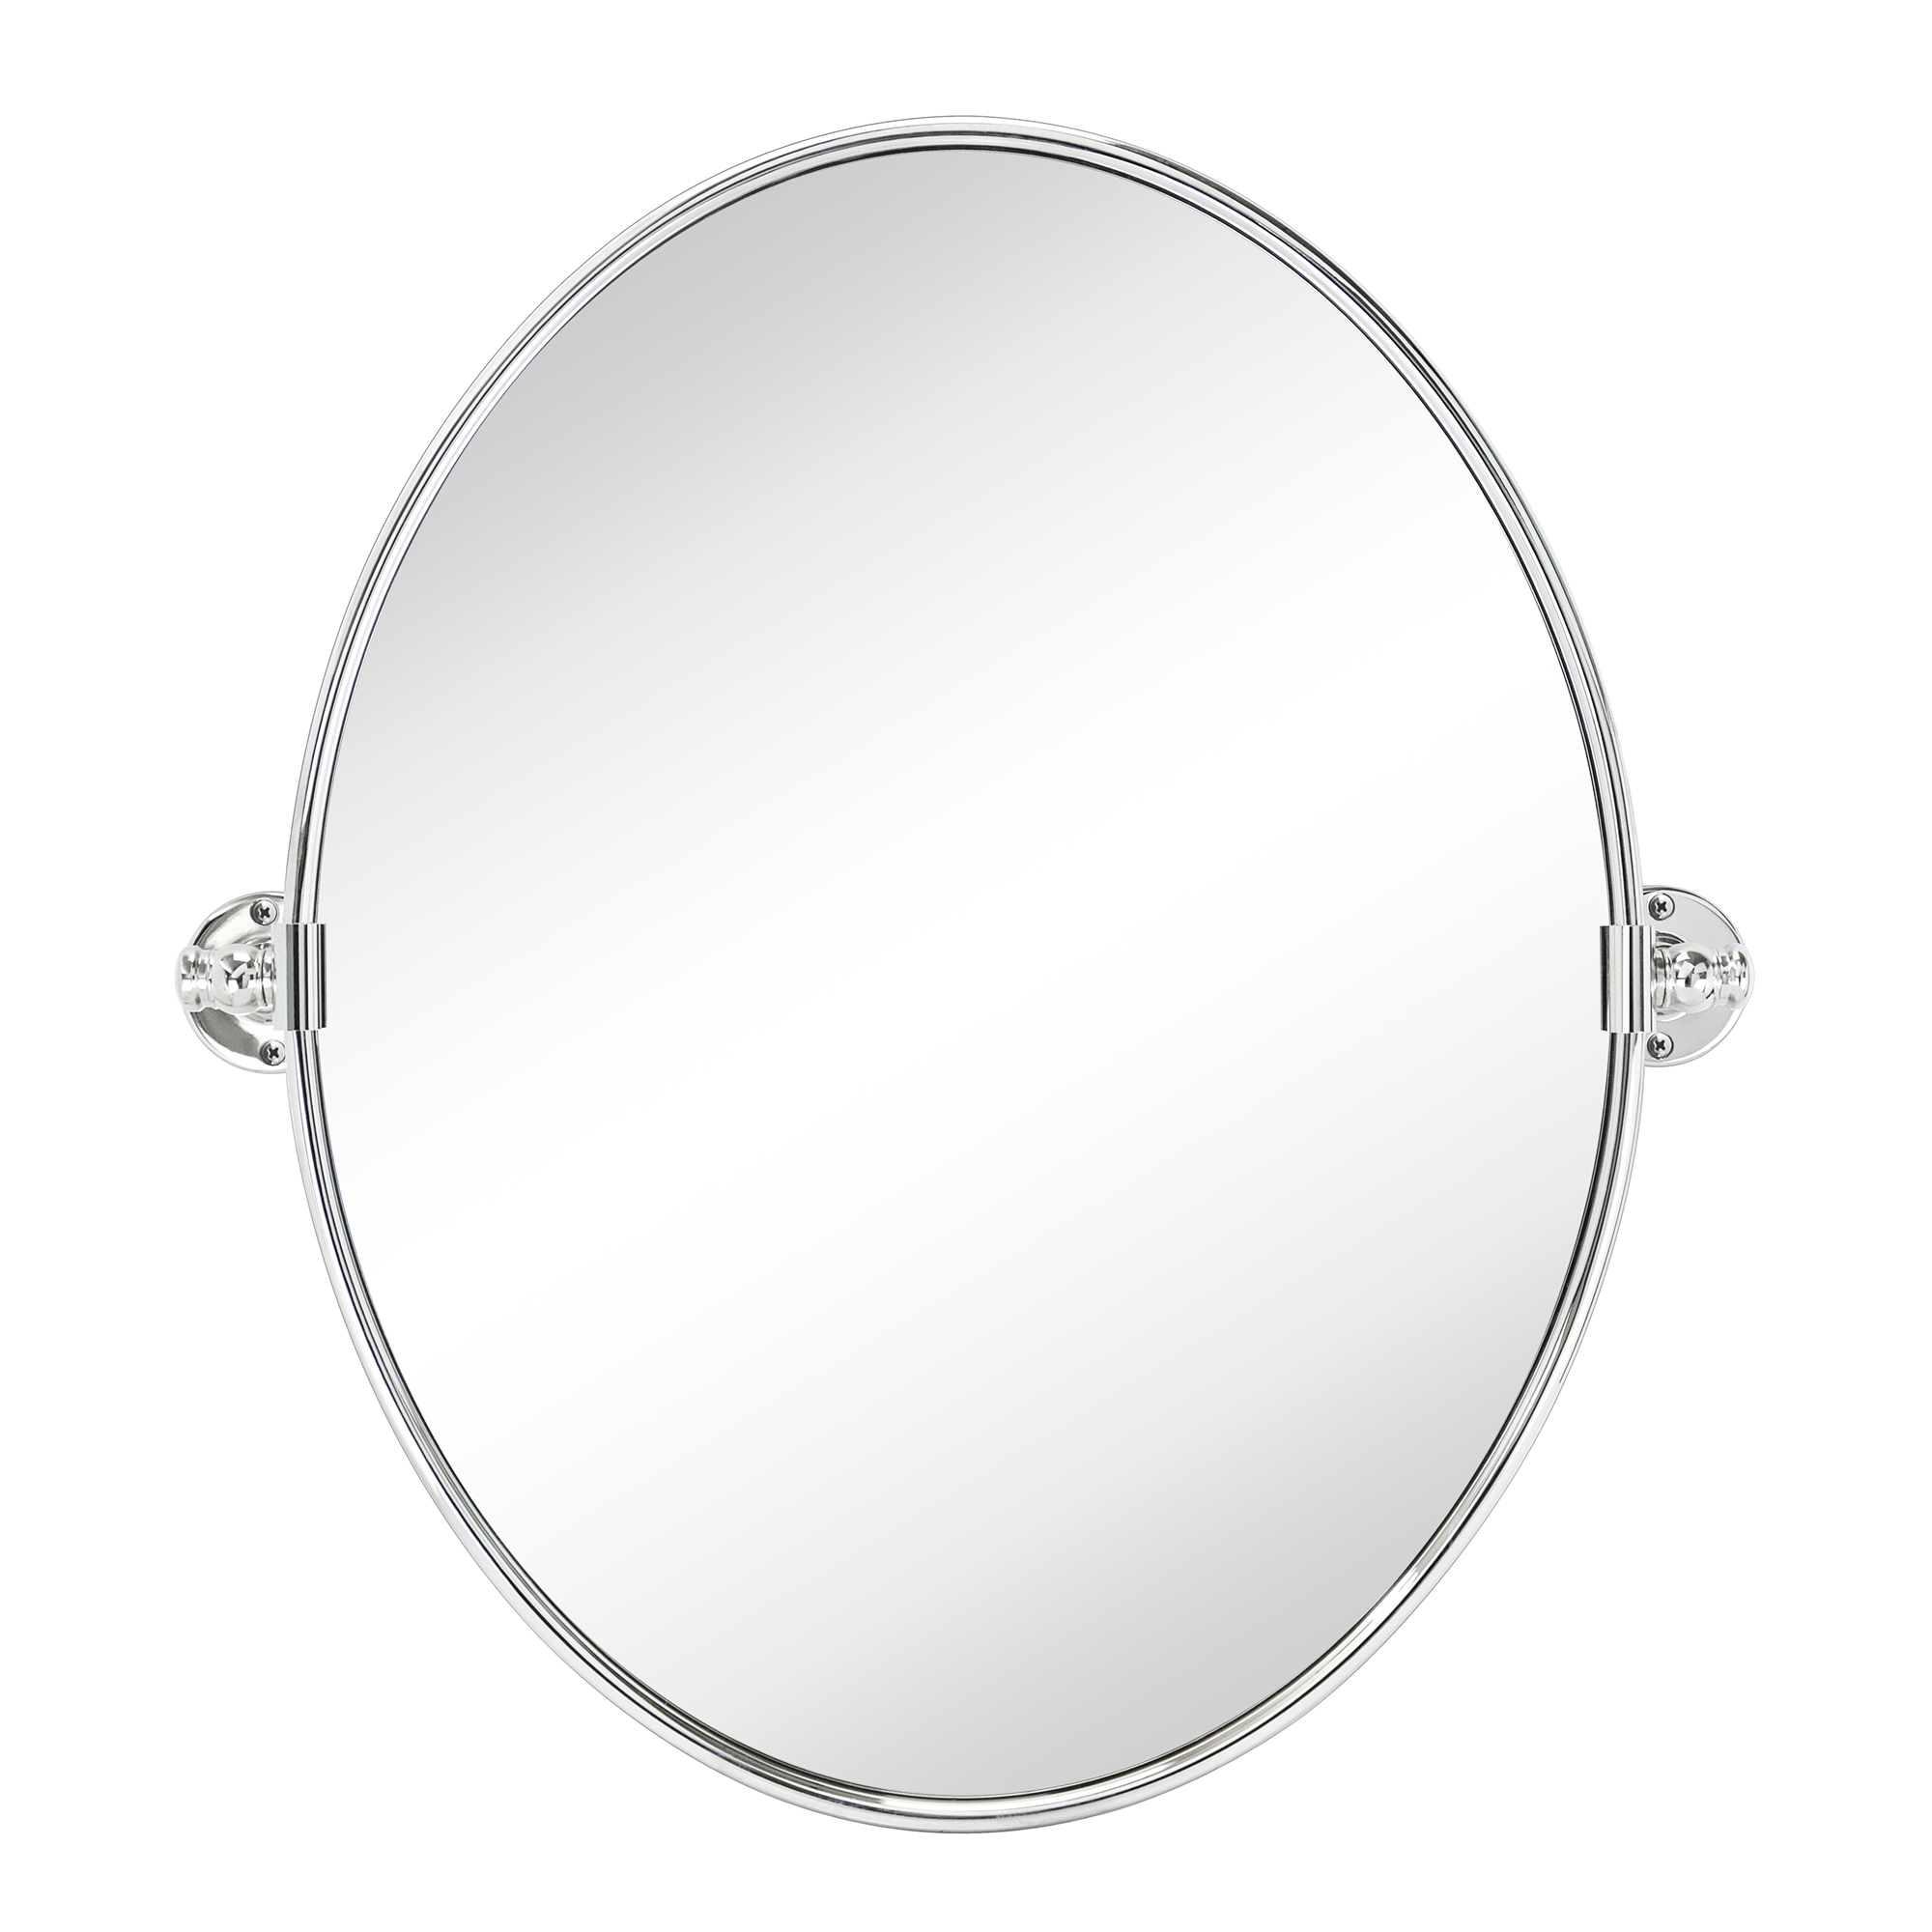 Luecinda Oval Metal Wall Mirror-19x24-Chrome